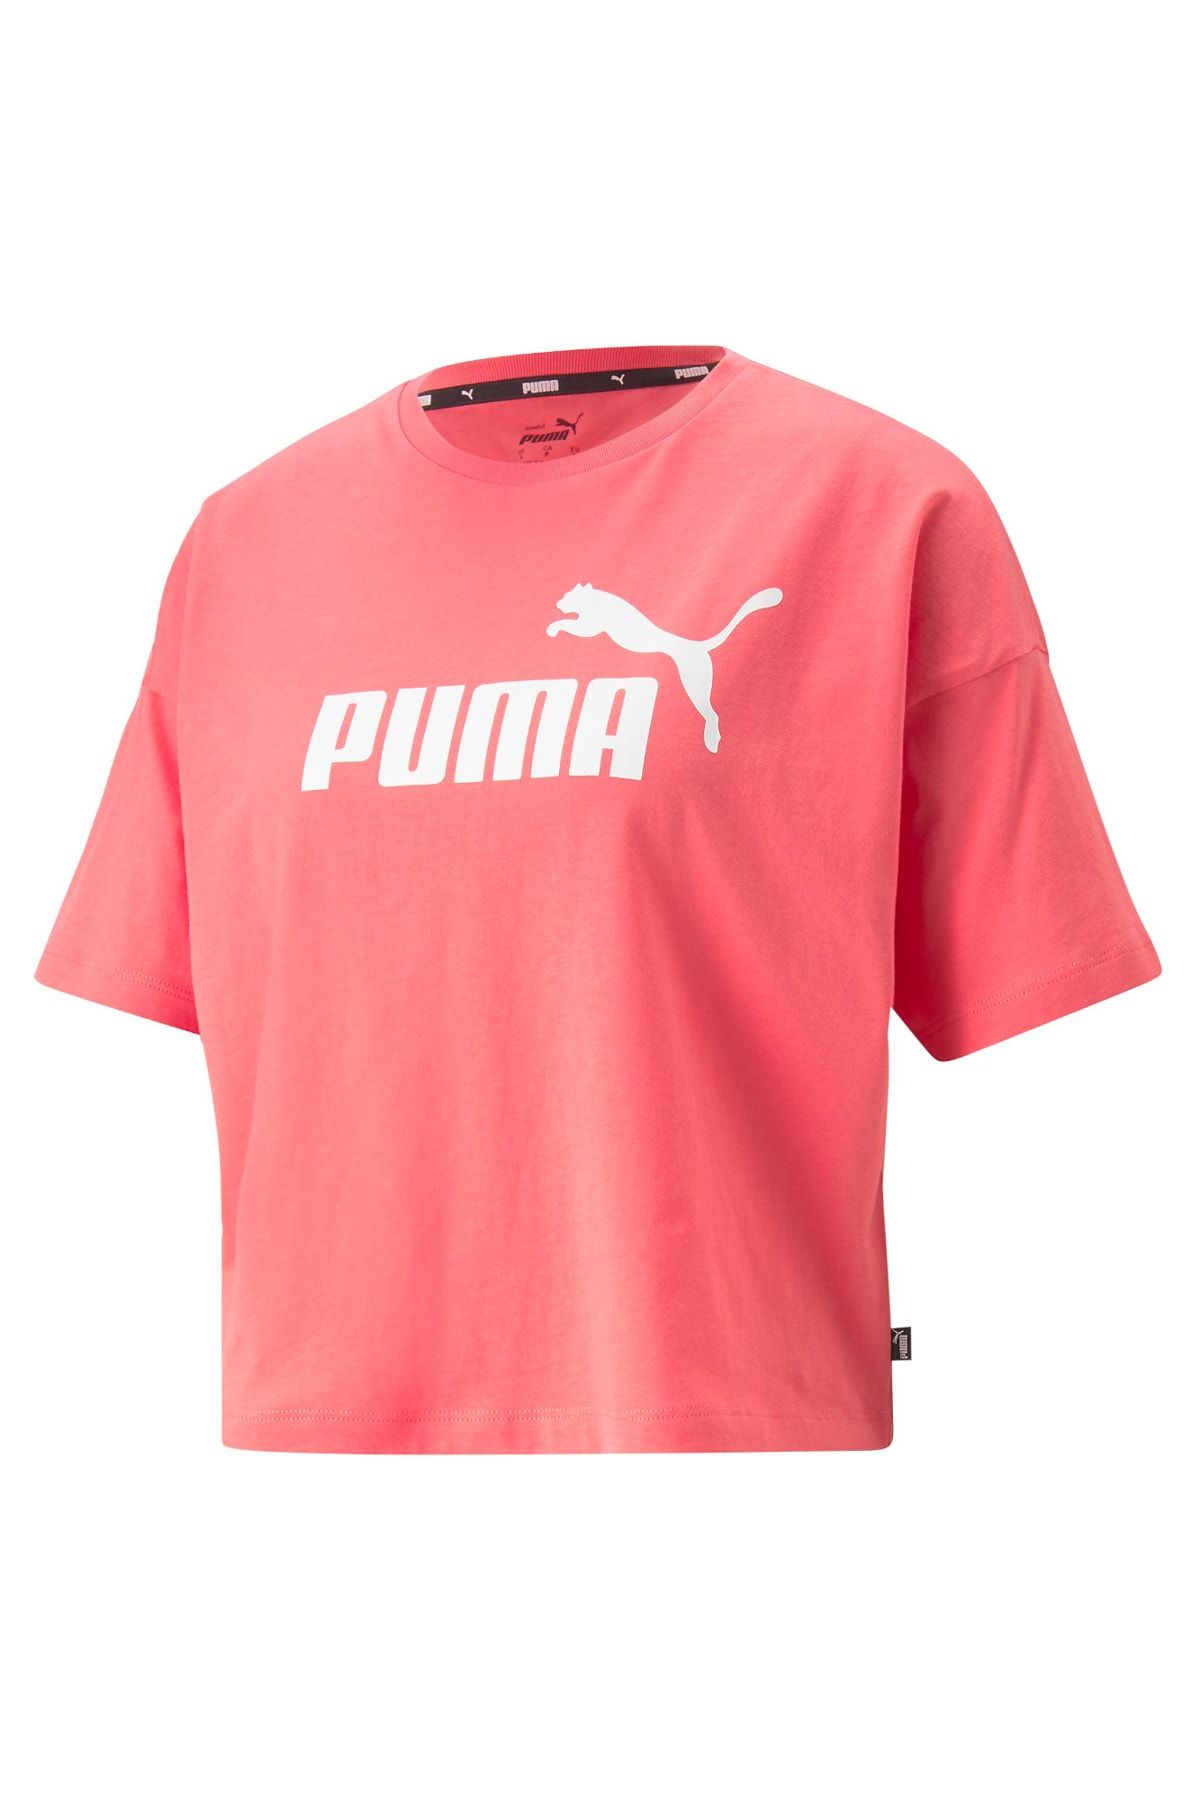 T-Shirt Women/Girls Puma - Trendyol